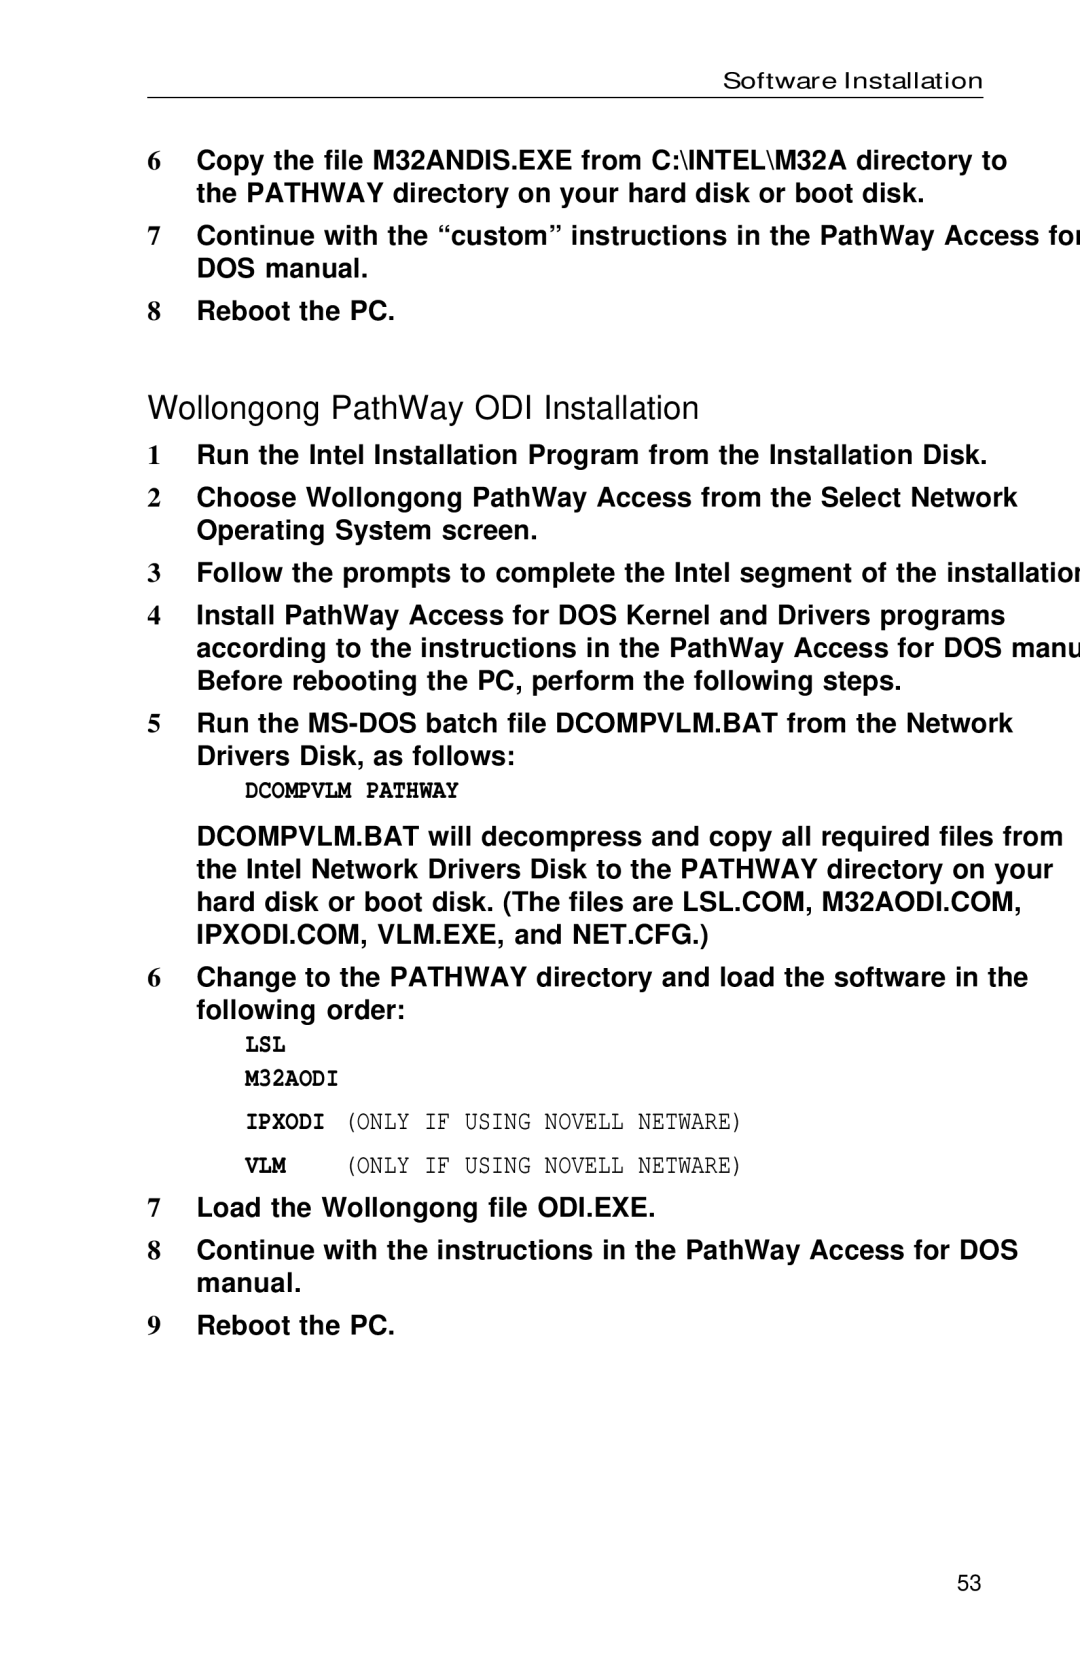 Intel PRO appendix Wollongong PathWay ODI Installation, Dcompvlm Pathway 